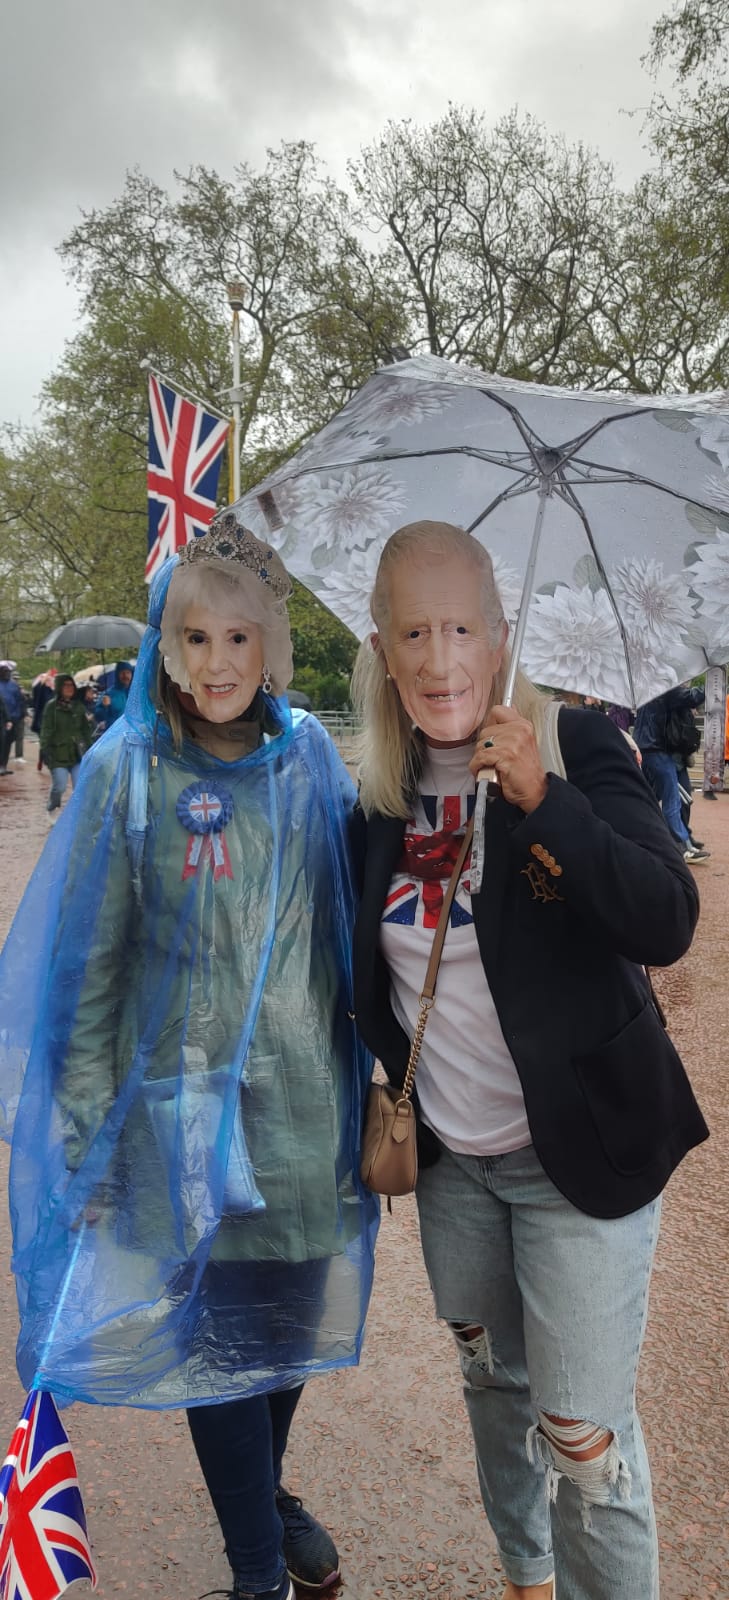 Paula Clayton (Charles) and Alexia Sheraton (Camilla) said the rain hadn’t damped their spirits